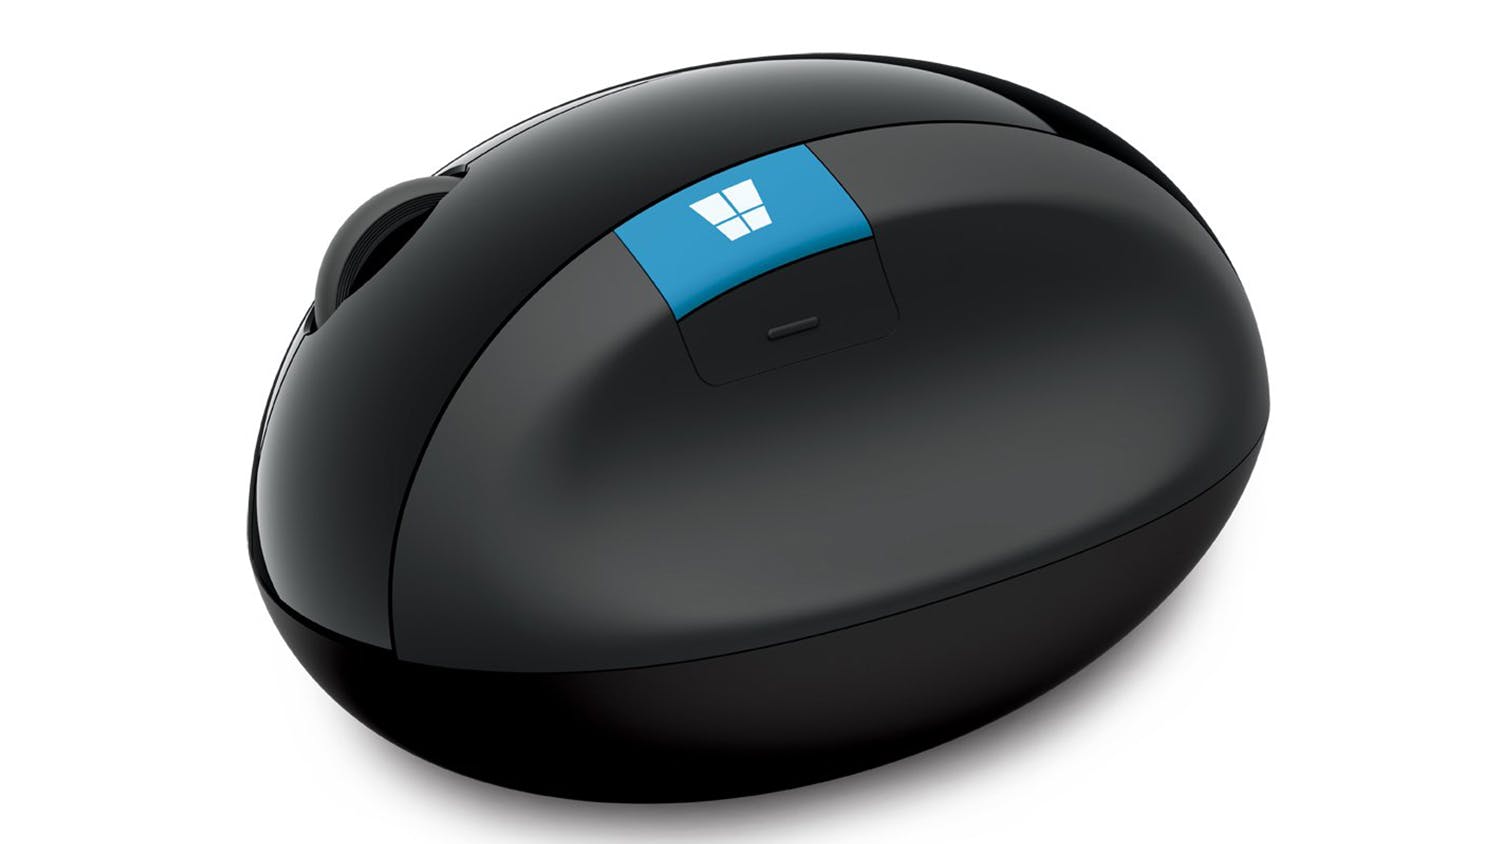 Microsoft Sculpt Ergonomic Wireless Mouse